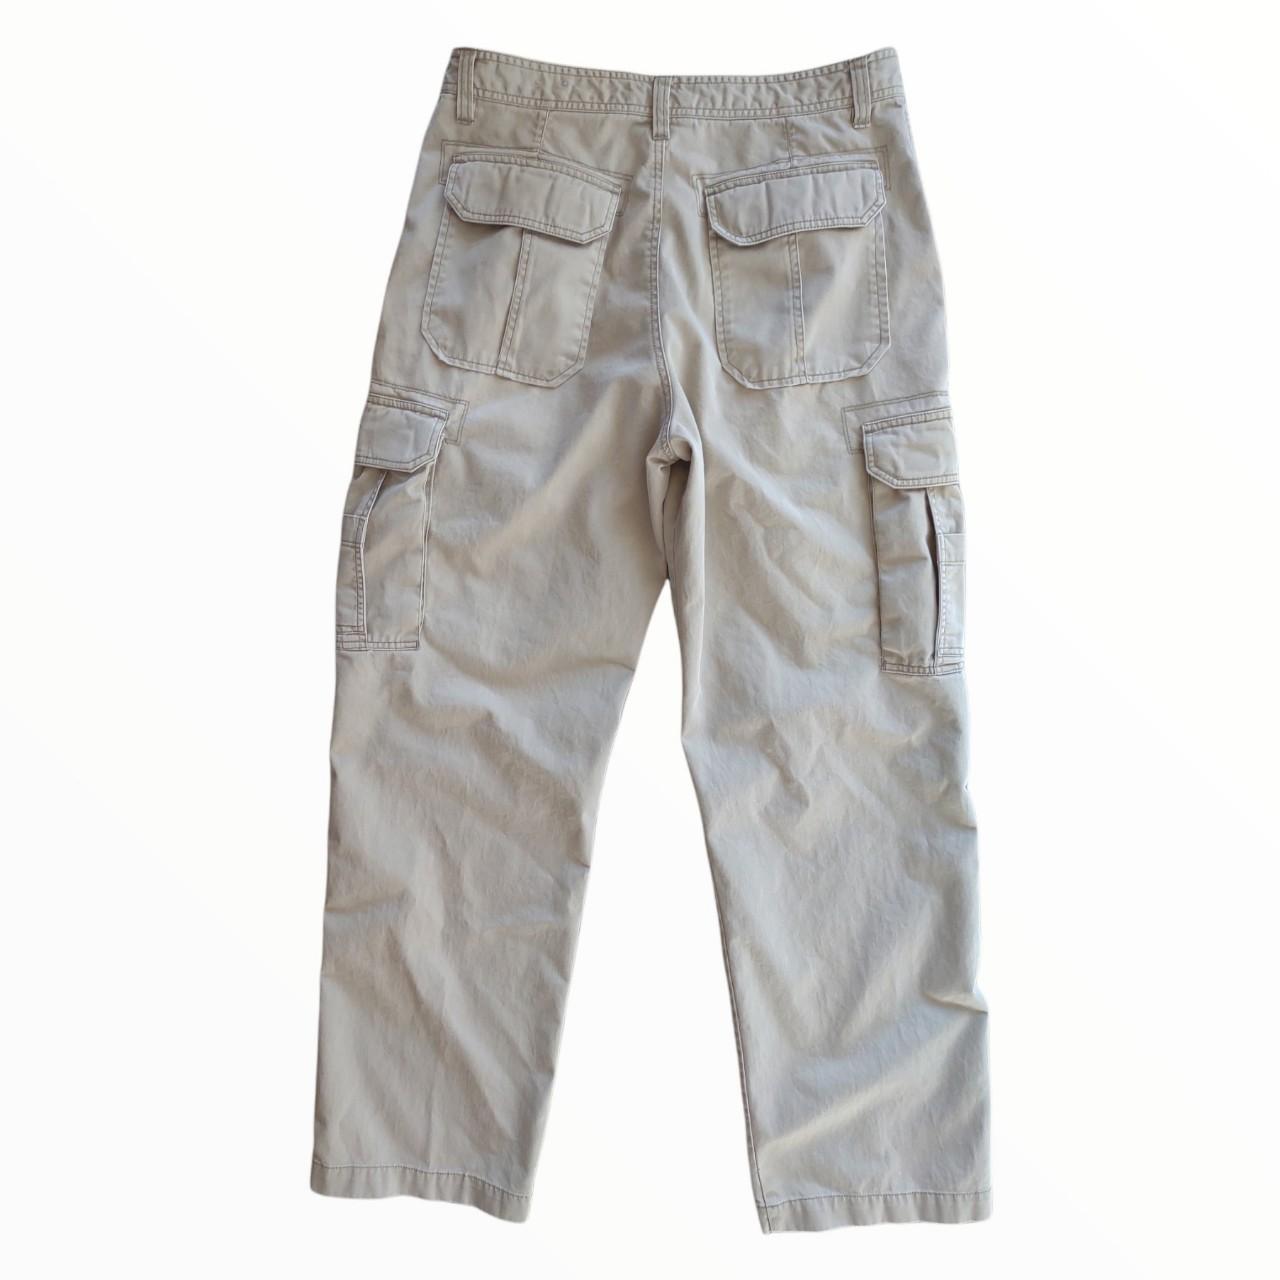 Khaki cargo pants • Many Pockets Size: 34W×34L... - Depop